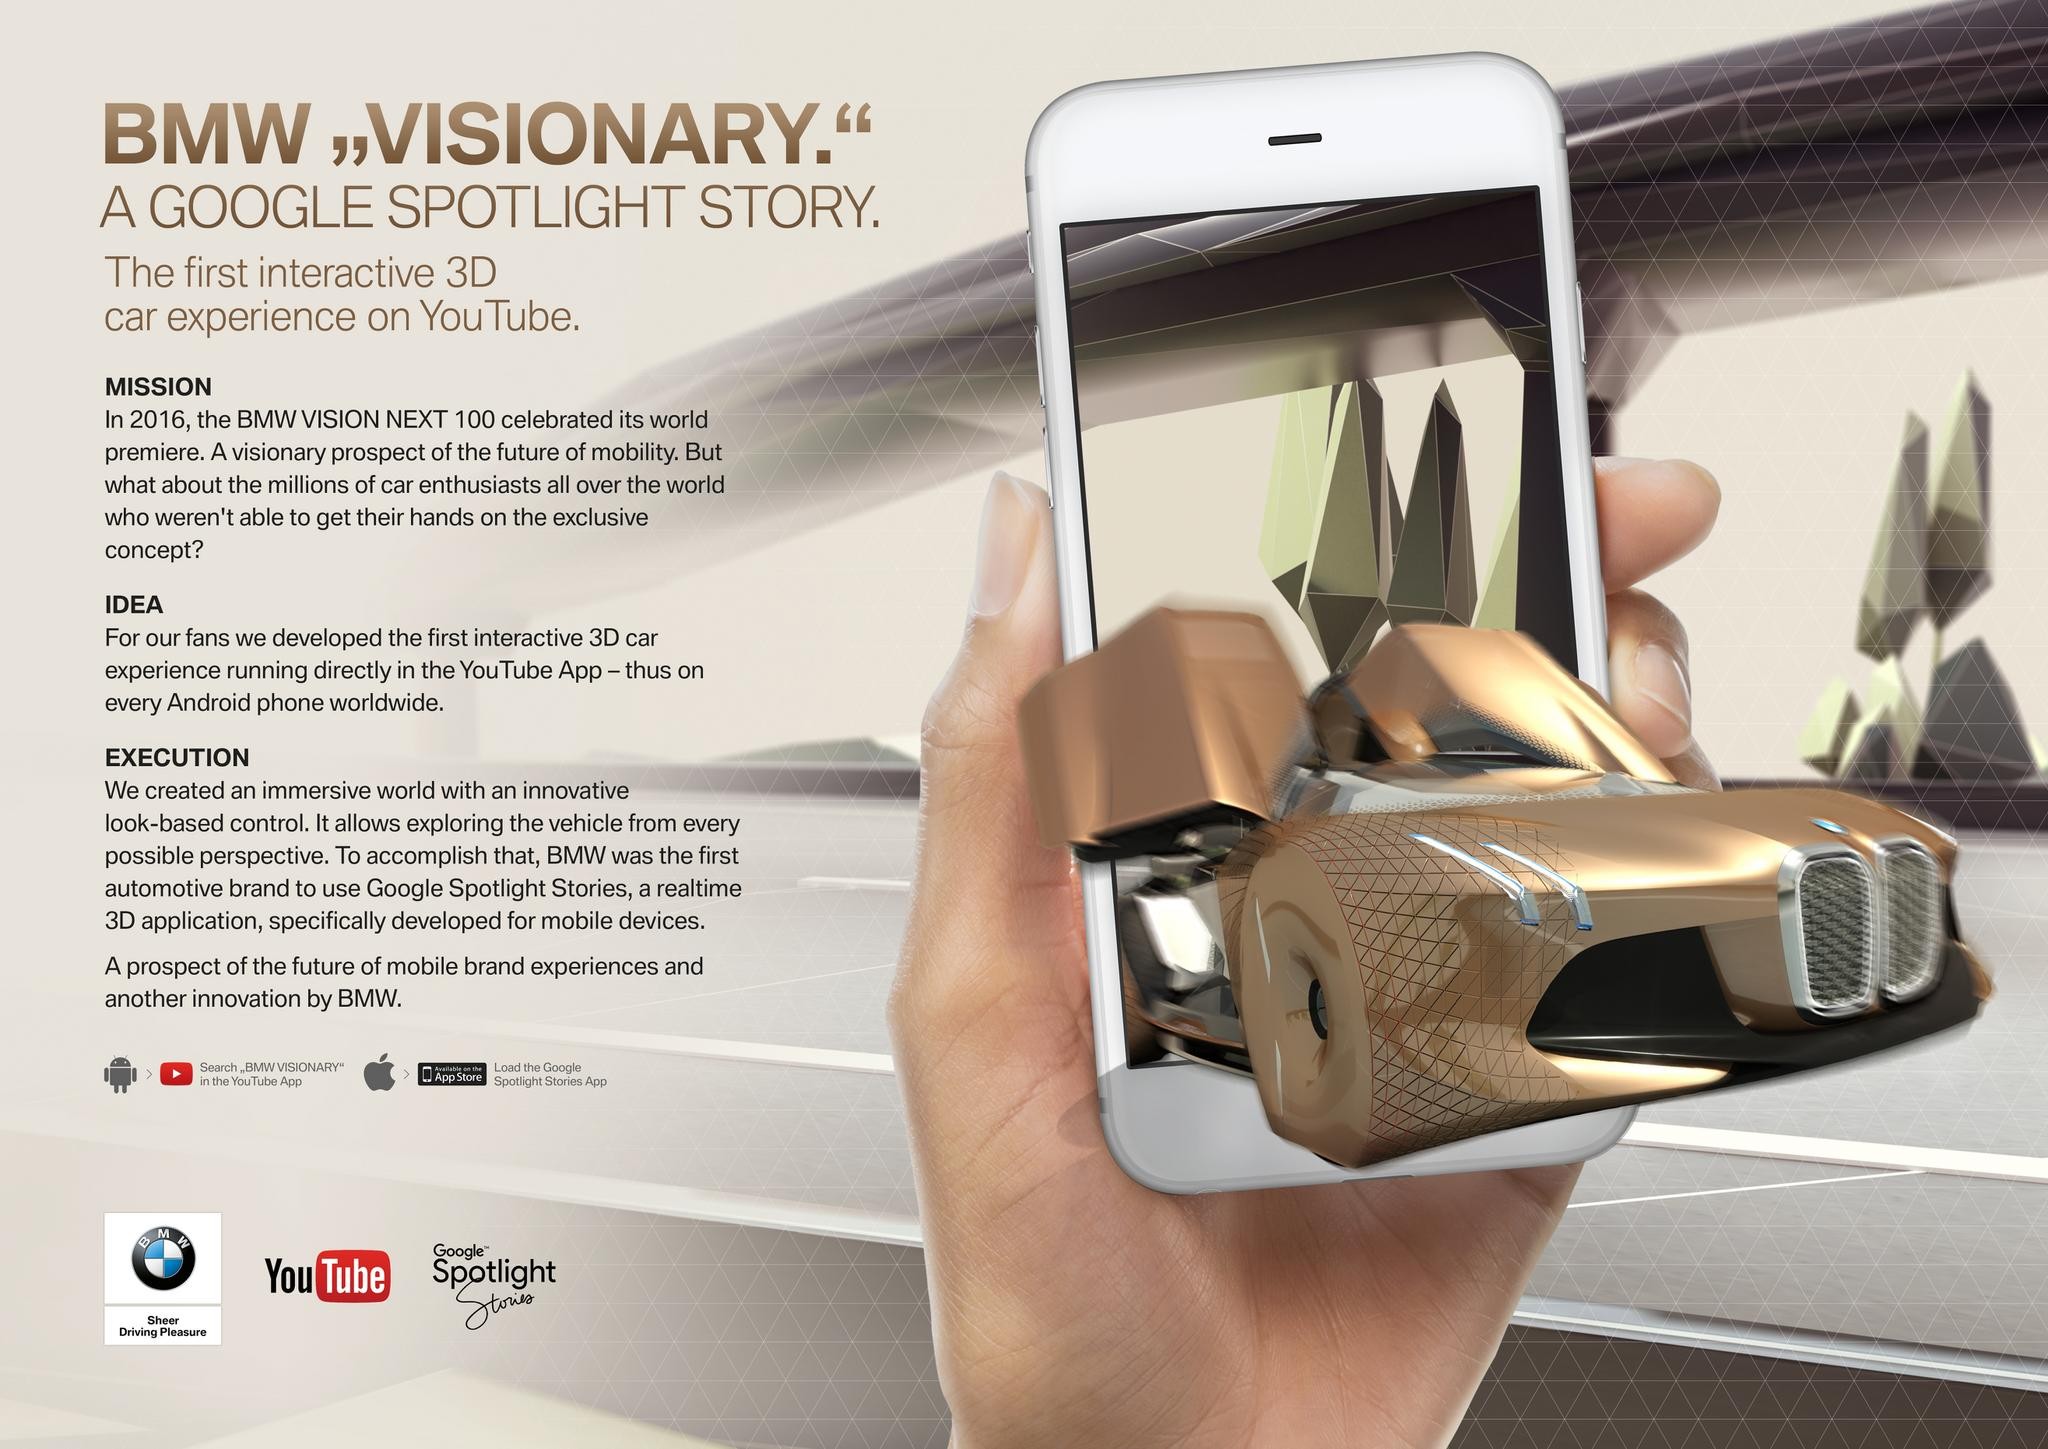 "BMW VISIONARY – A Google Spotlight Story"